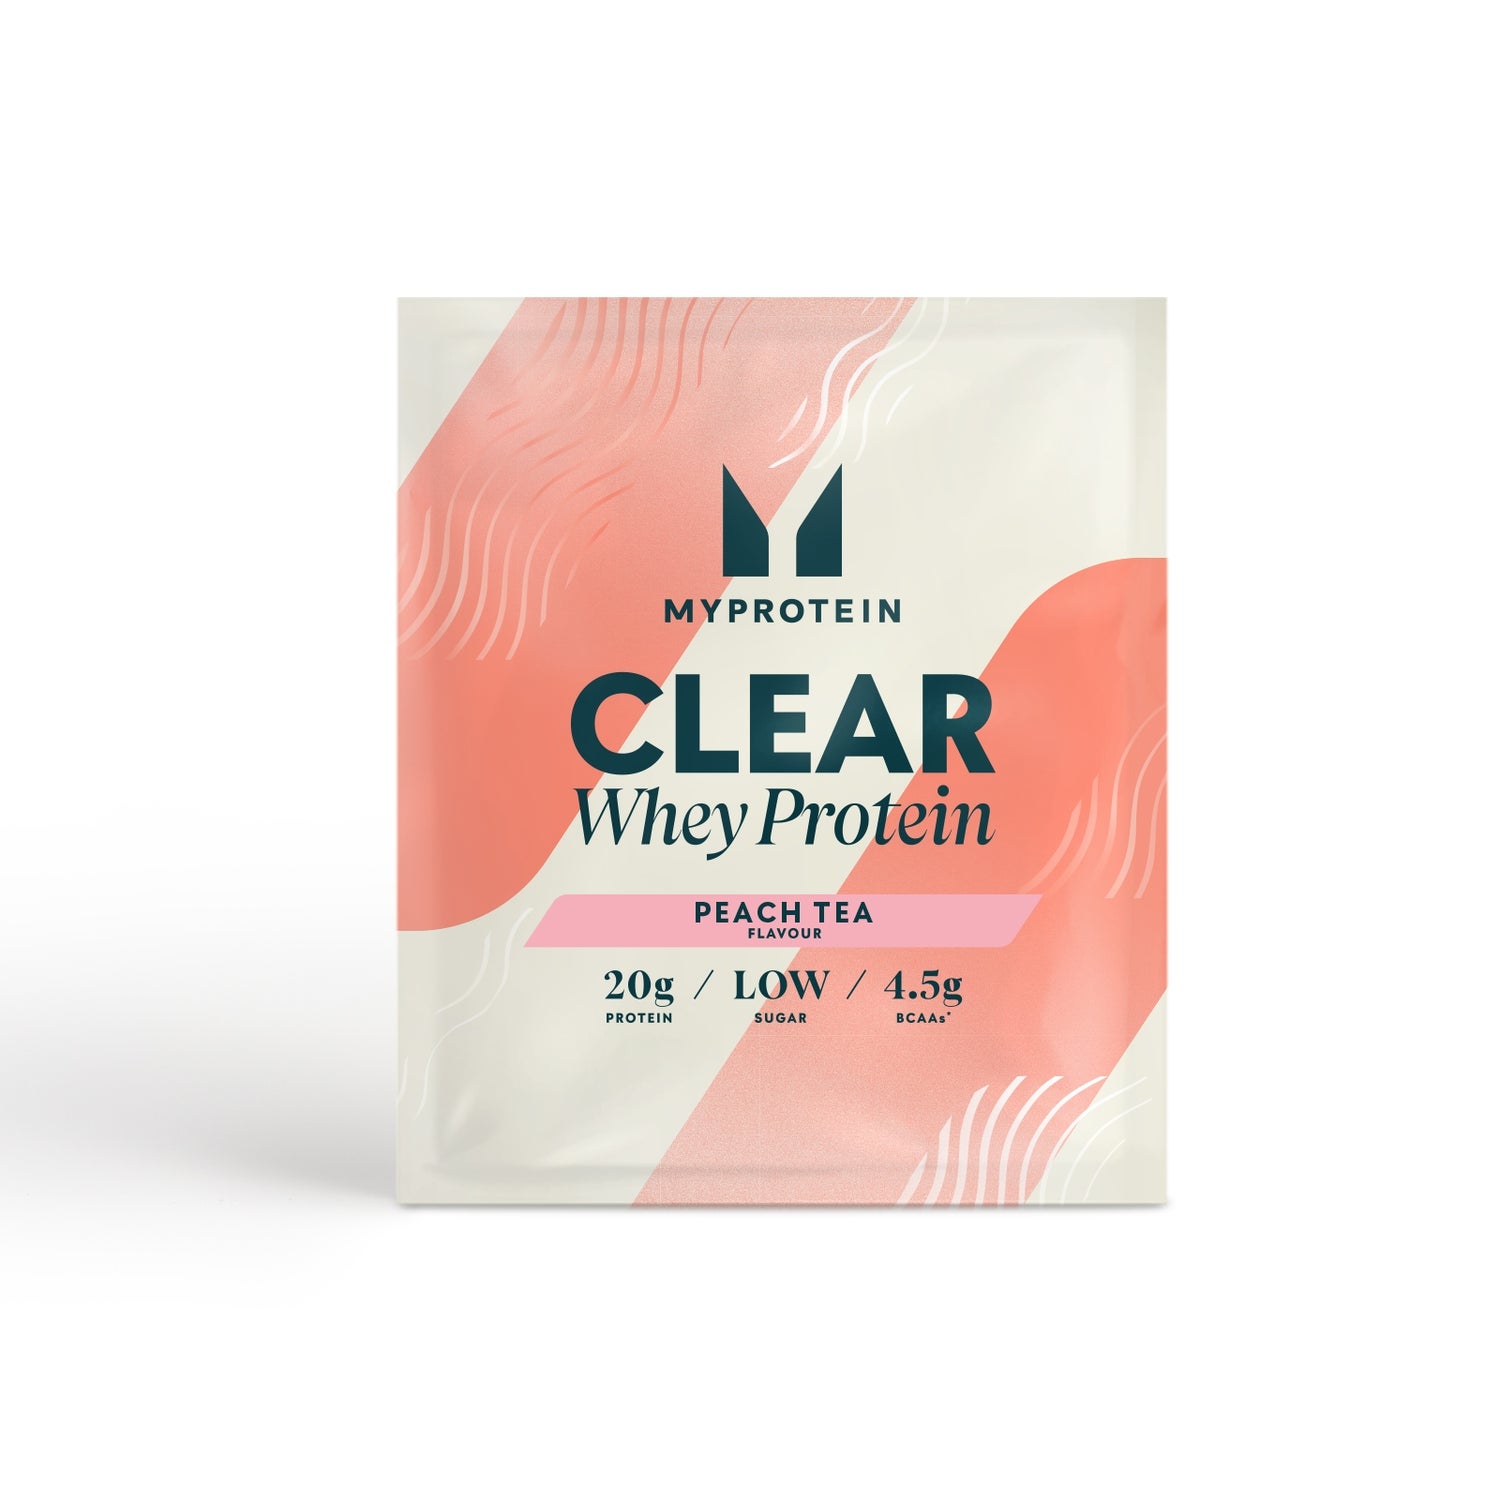 Myprotein Clear Whey Isolate (Sample) - 1servings - Peach Tea